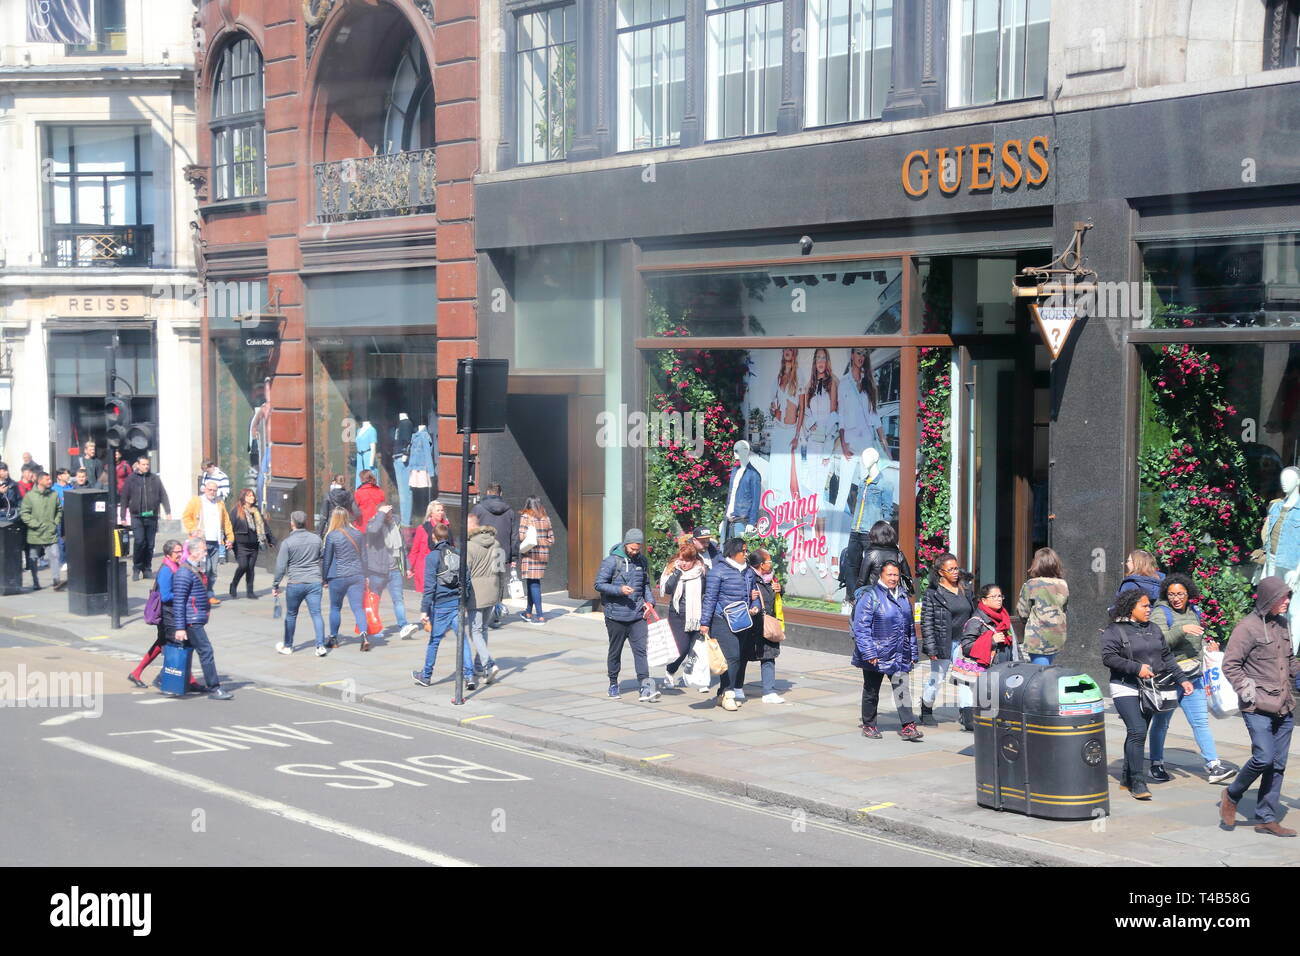 Guess store in Regent Street, London, UK Stock Photo - Alamy